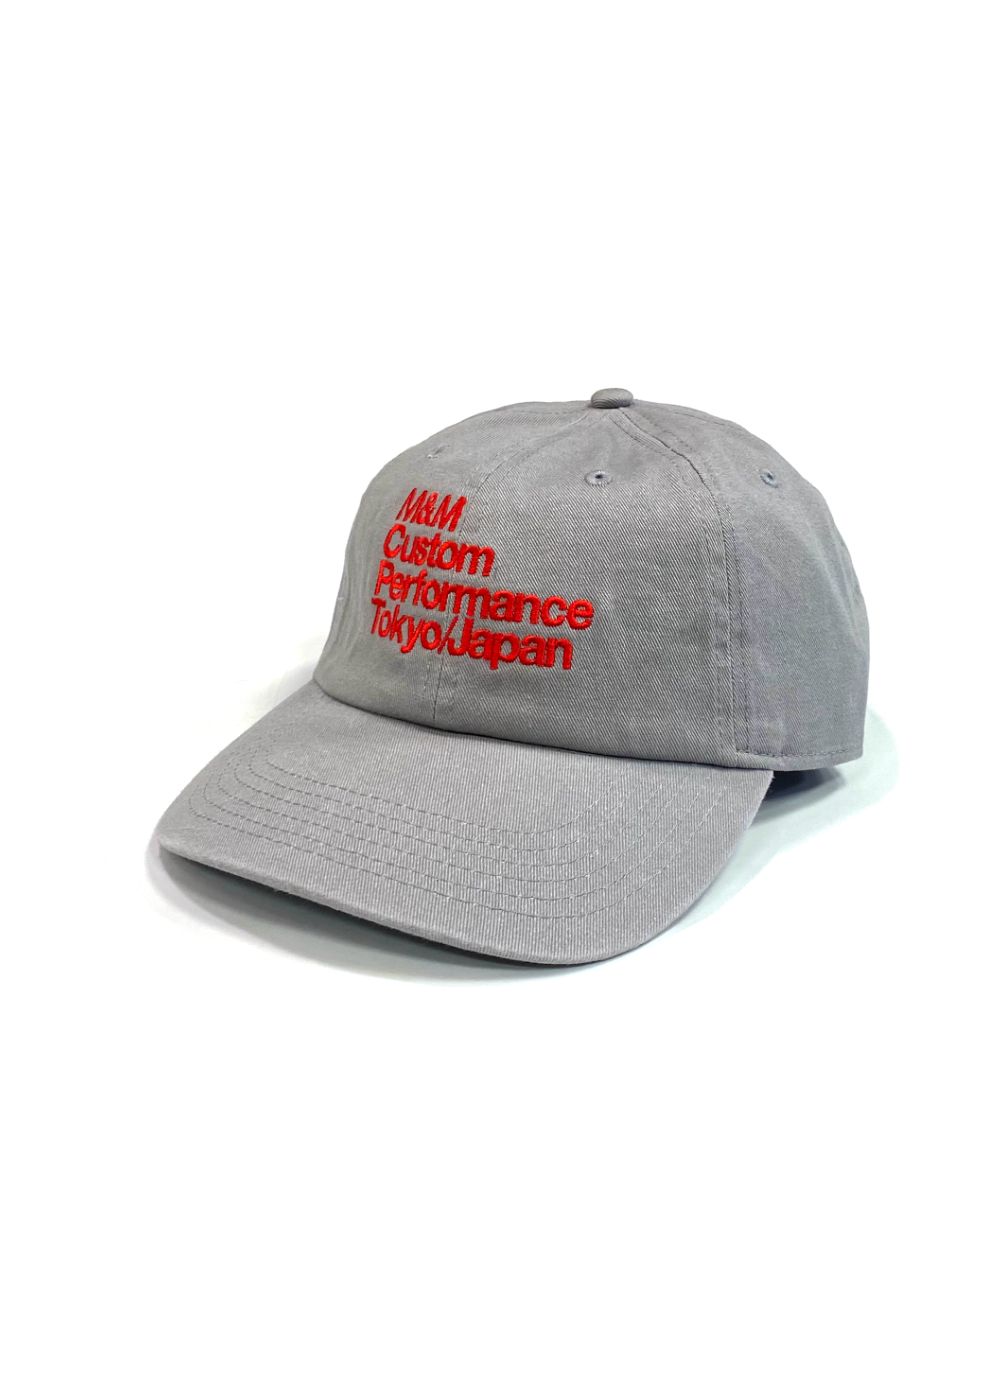 M&M CUSTOM PERFORMANCE - 【ラスト1点】COTTON CAP (GRAY) / ロゴ刺繍 